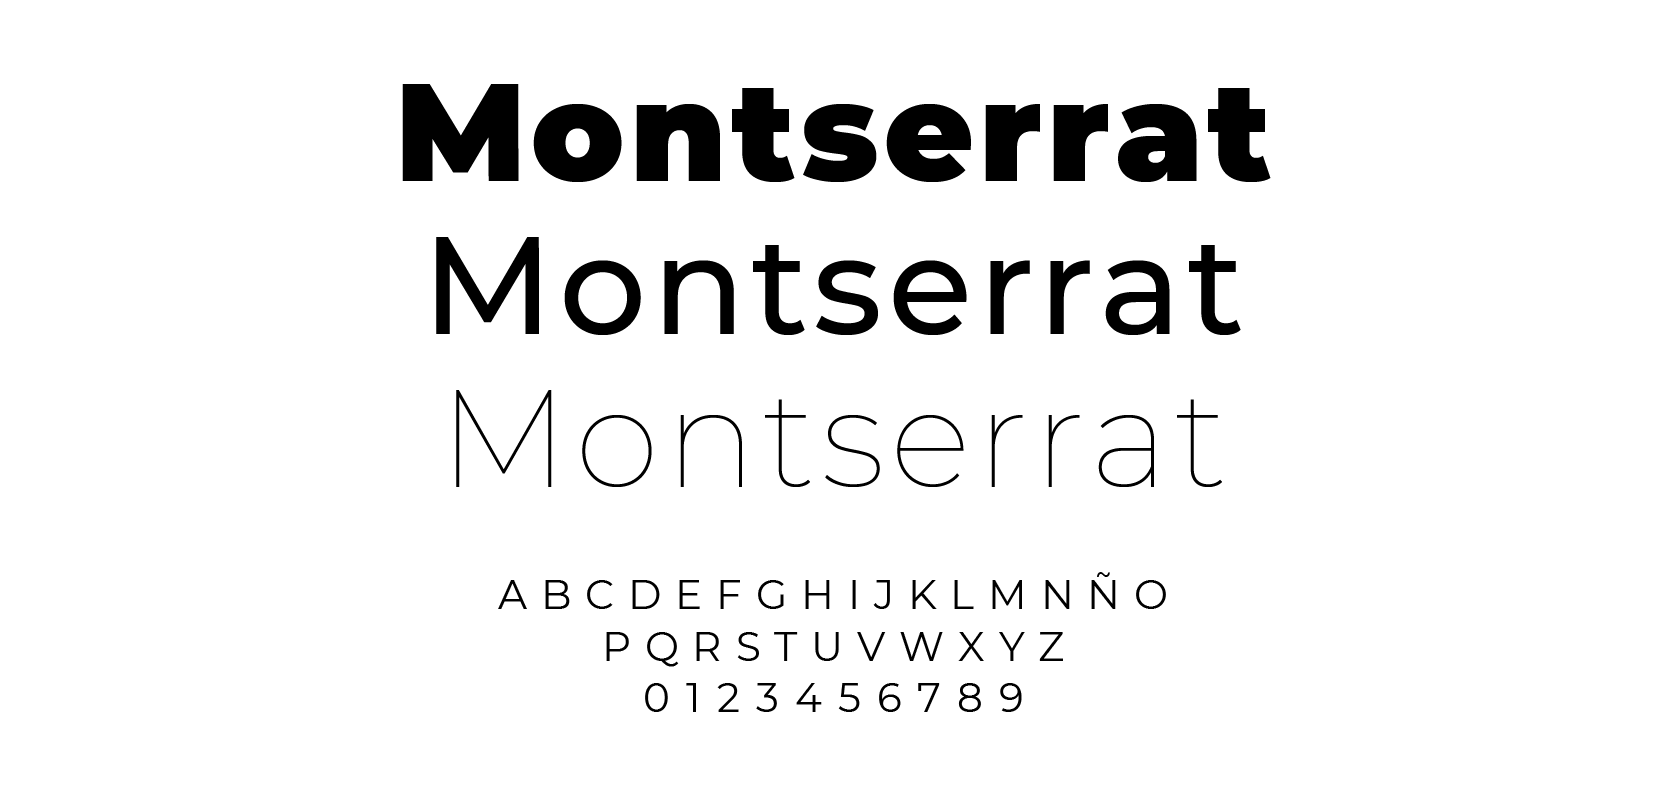 Montserrat Tipografía Google Fonts